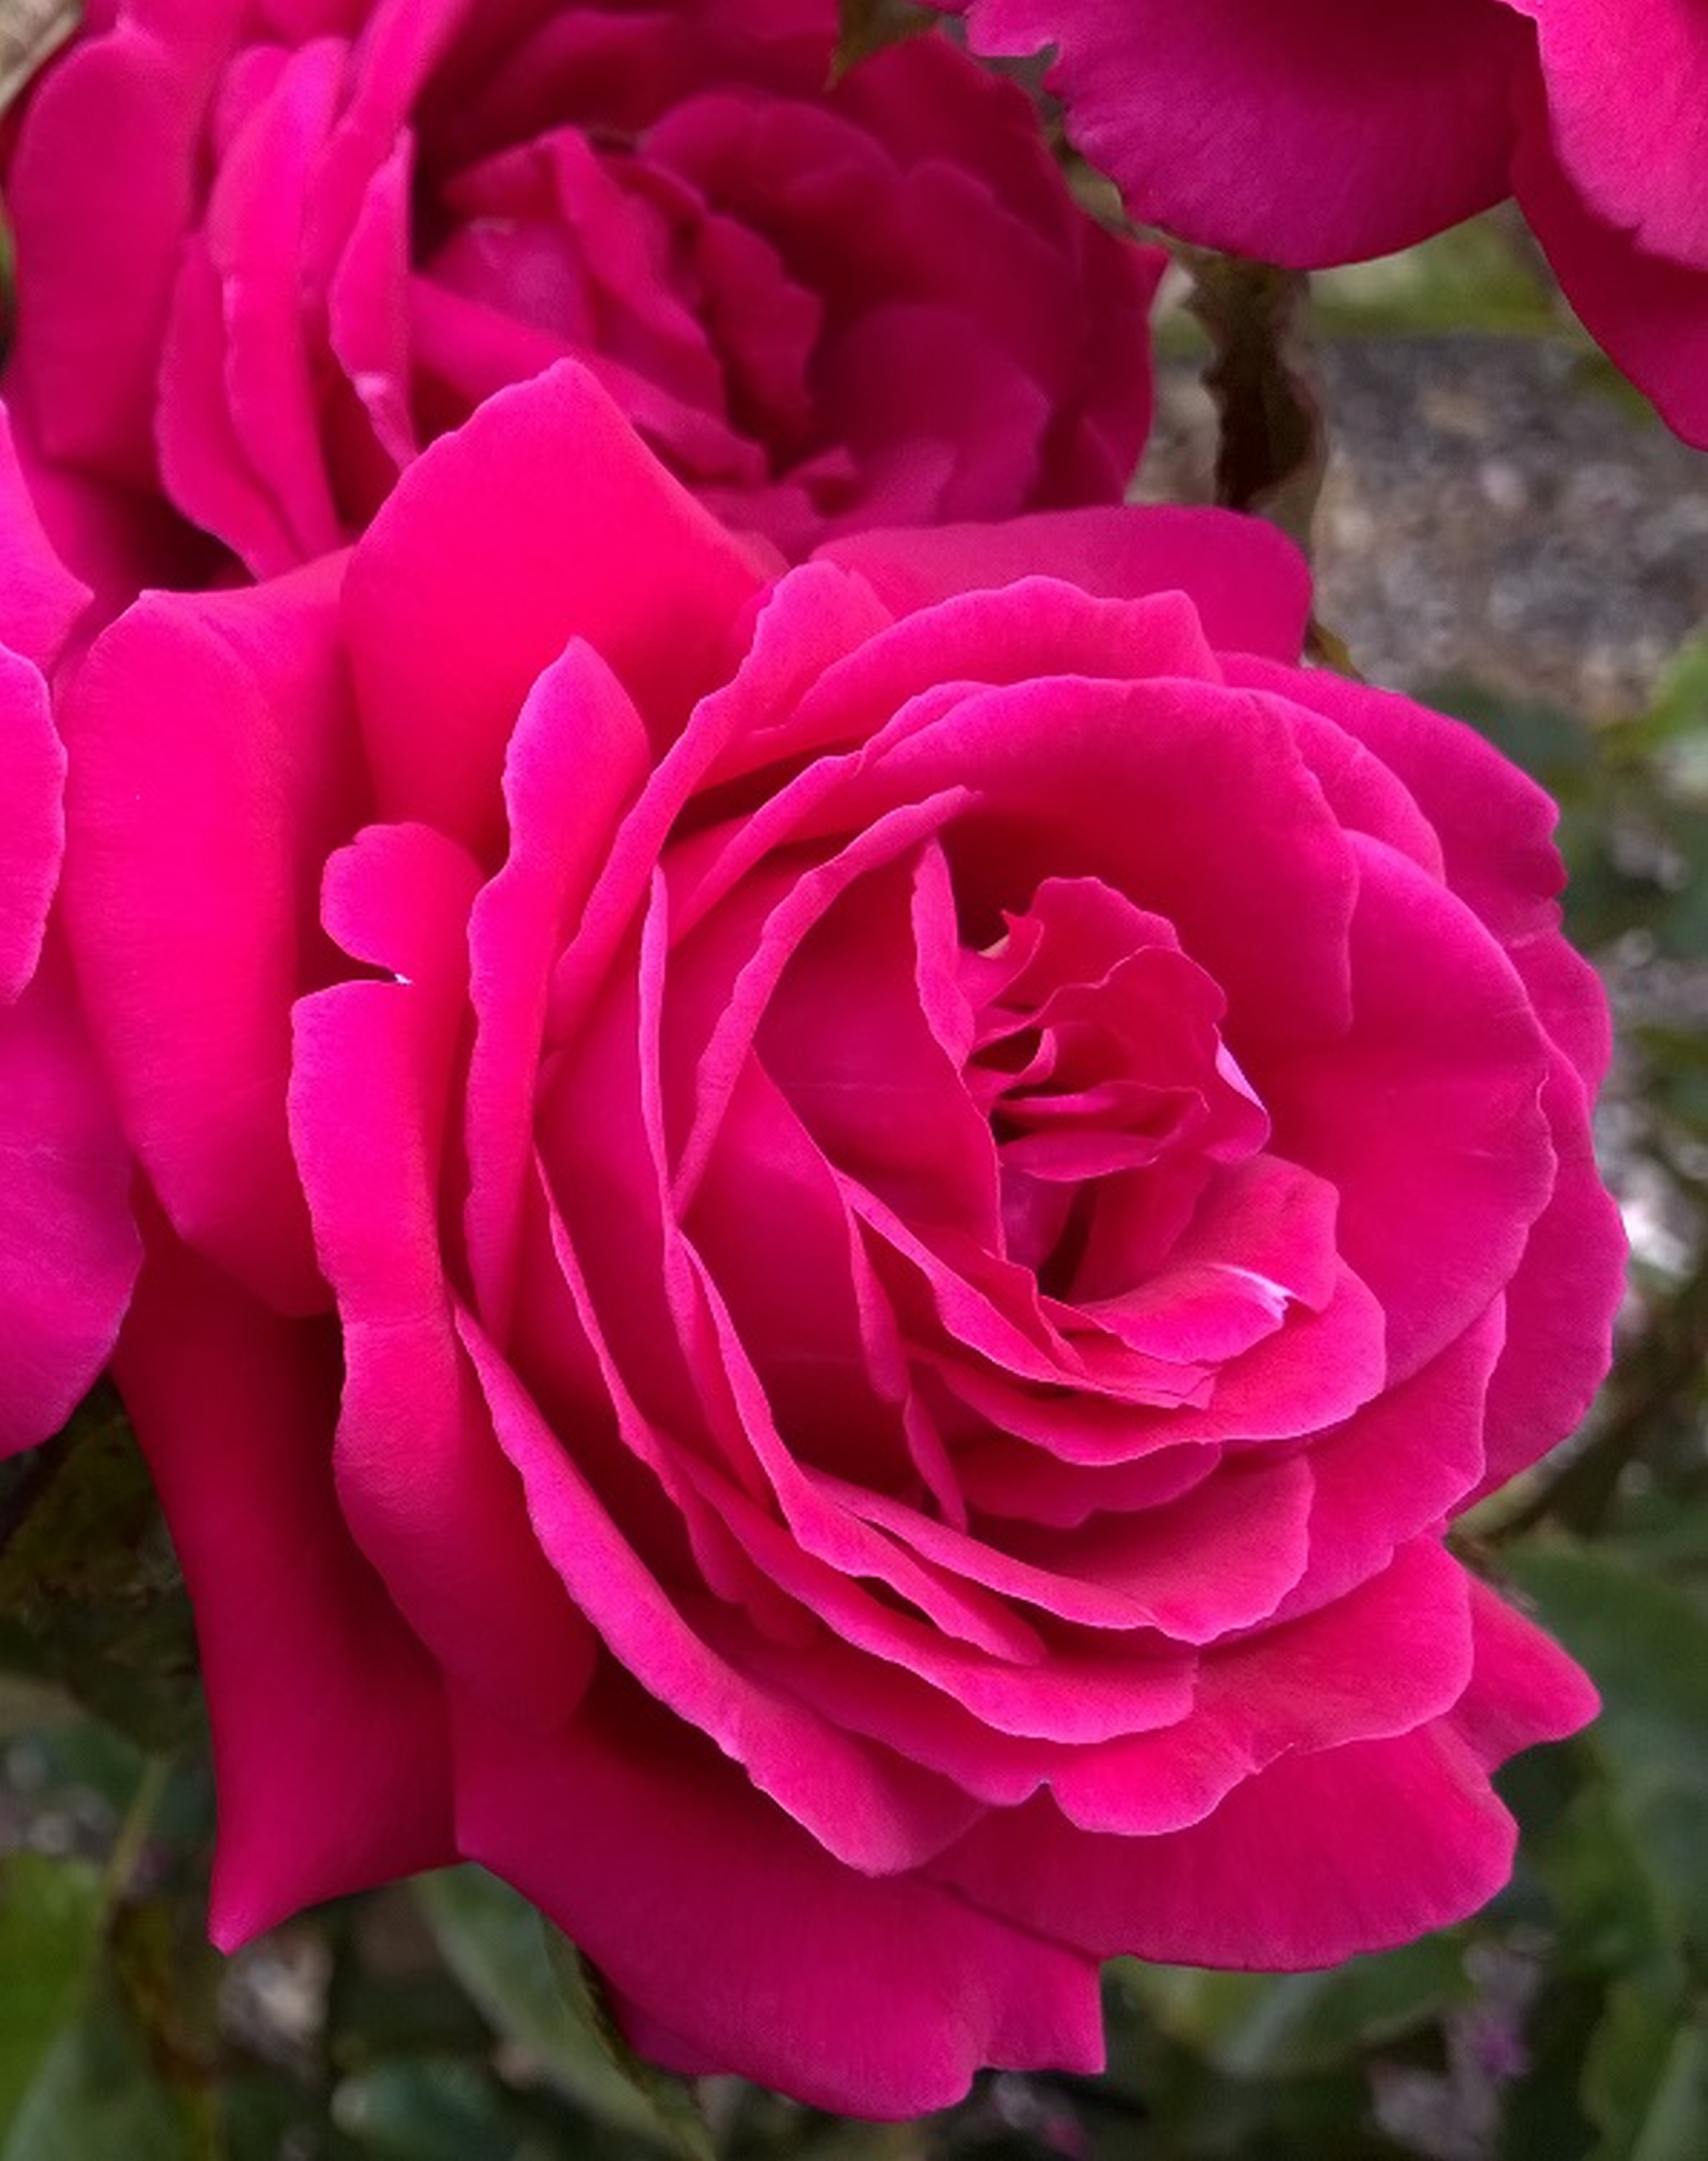 Magnifi-scent - photo credit Amore Roses